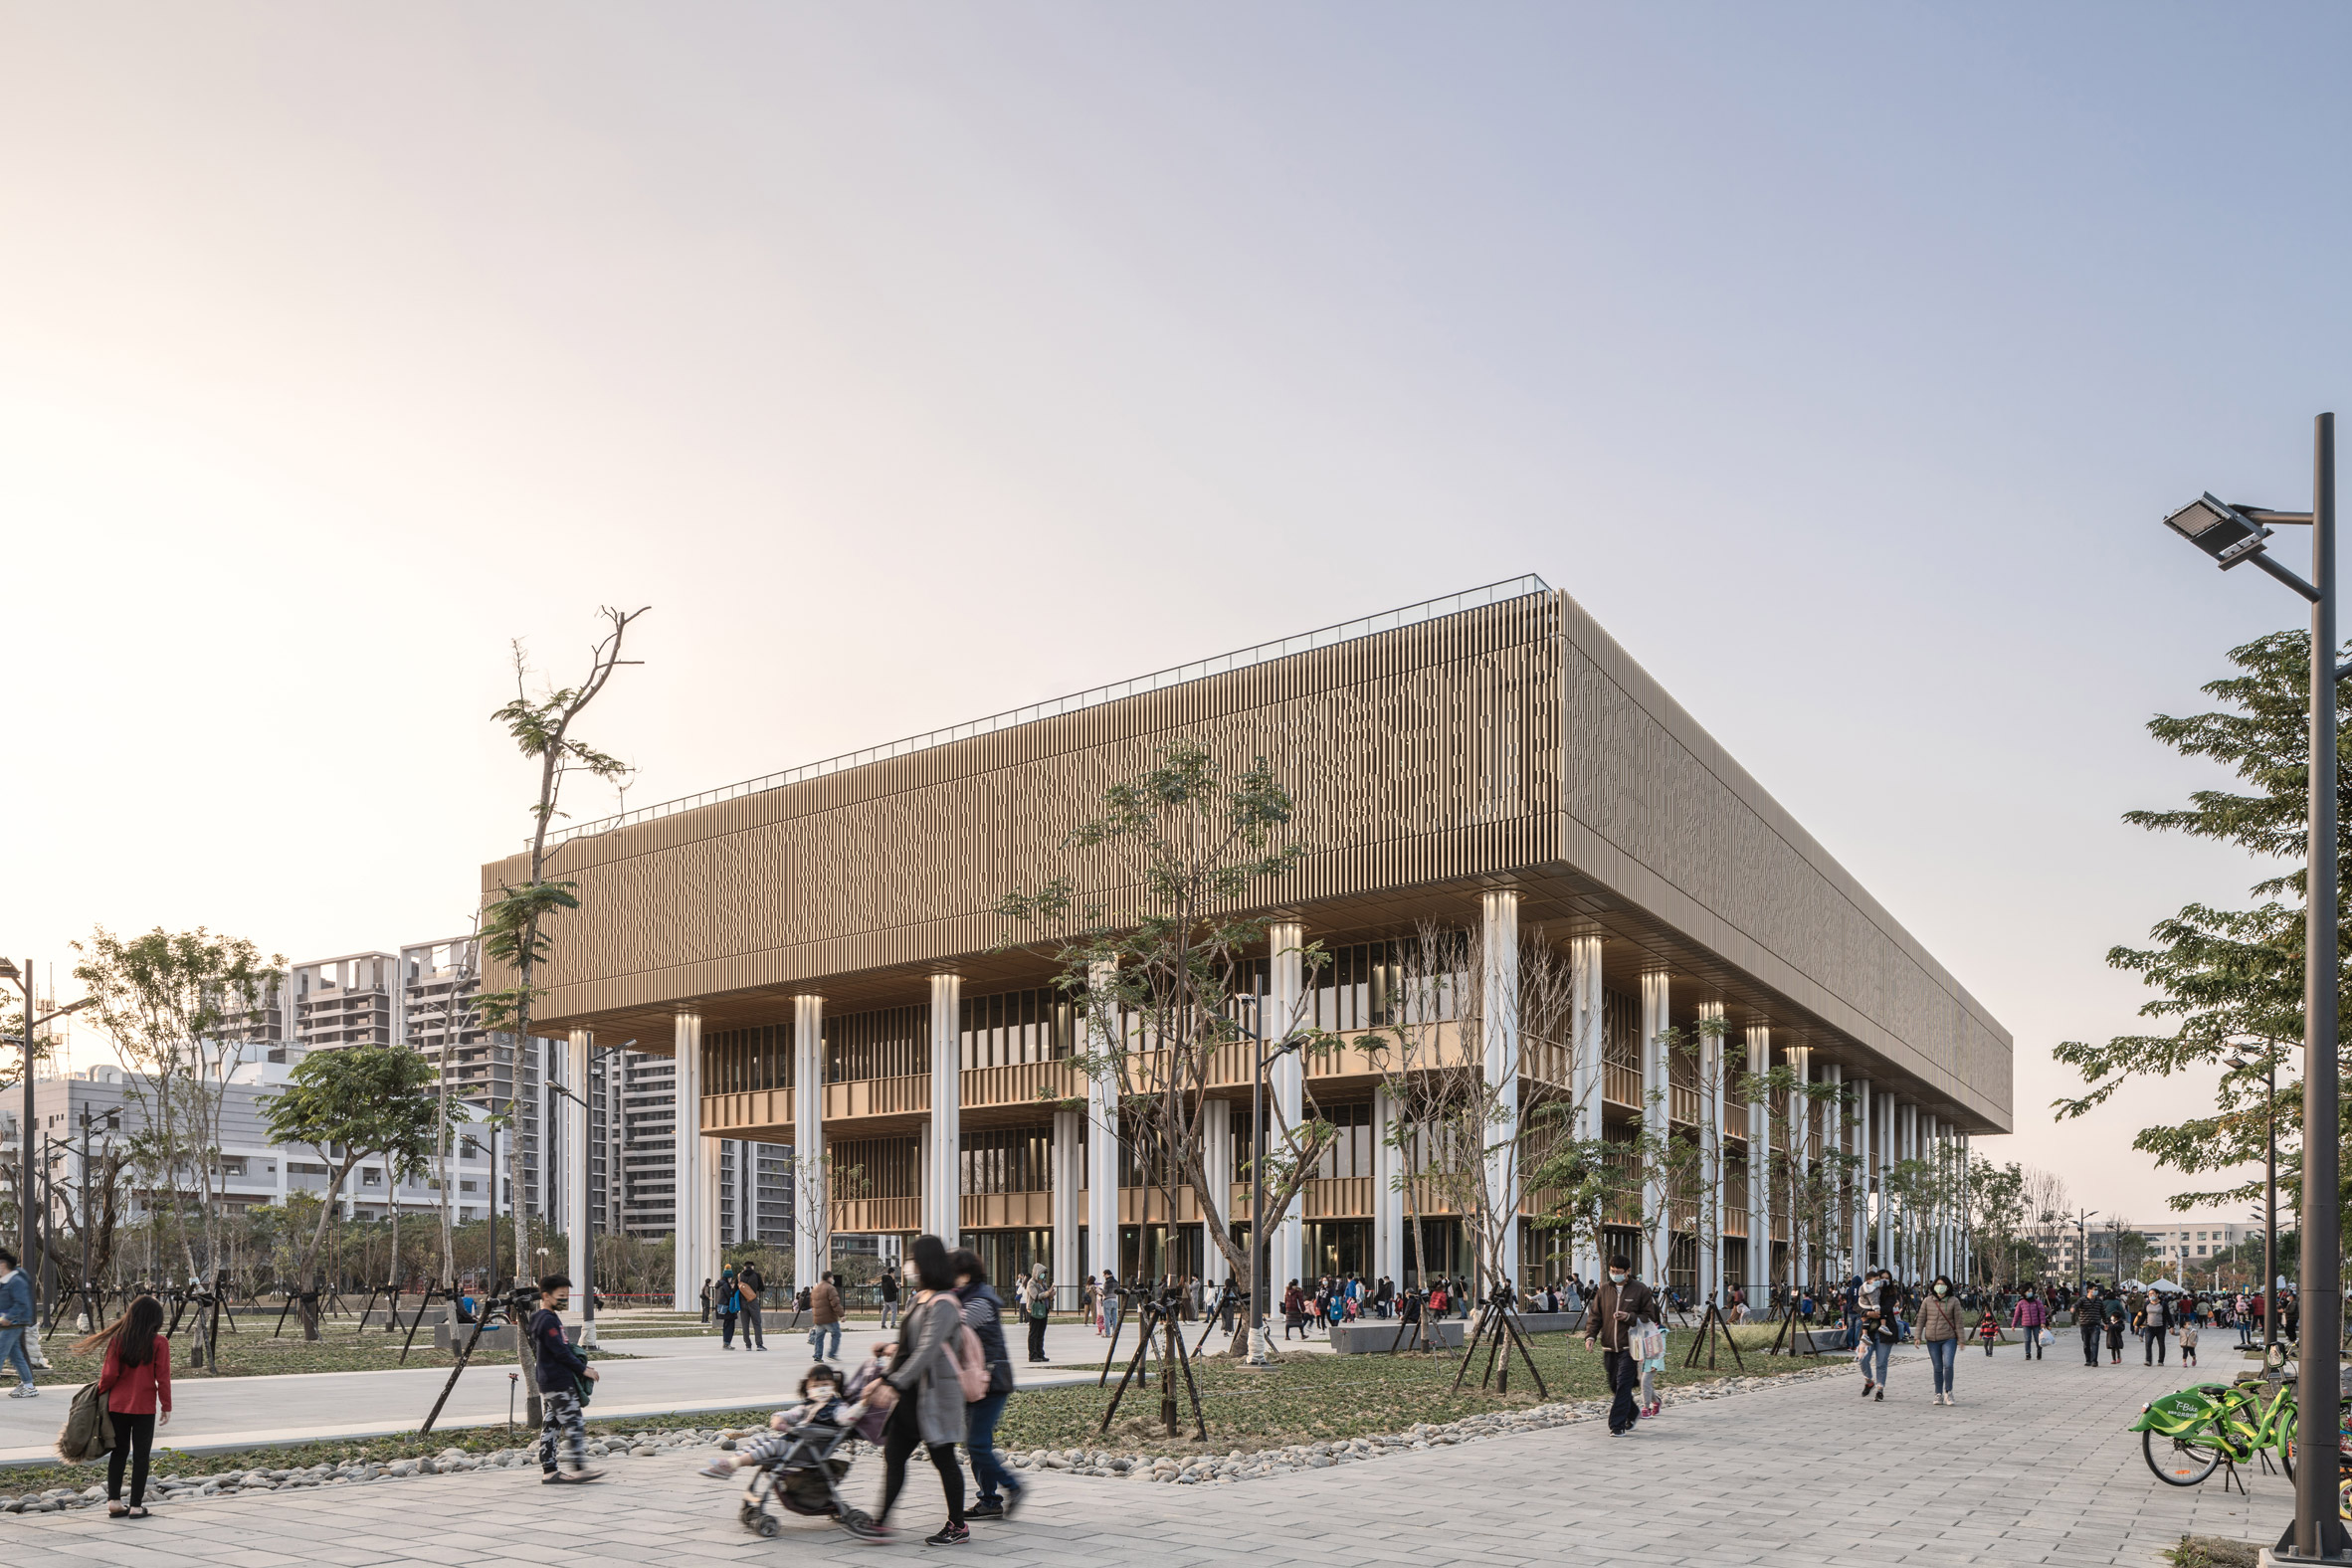 An aluminium-clad public library by Mecanoo and MAYU Architects